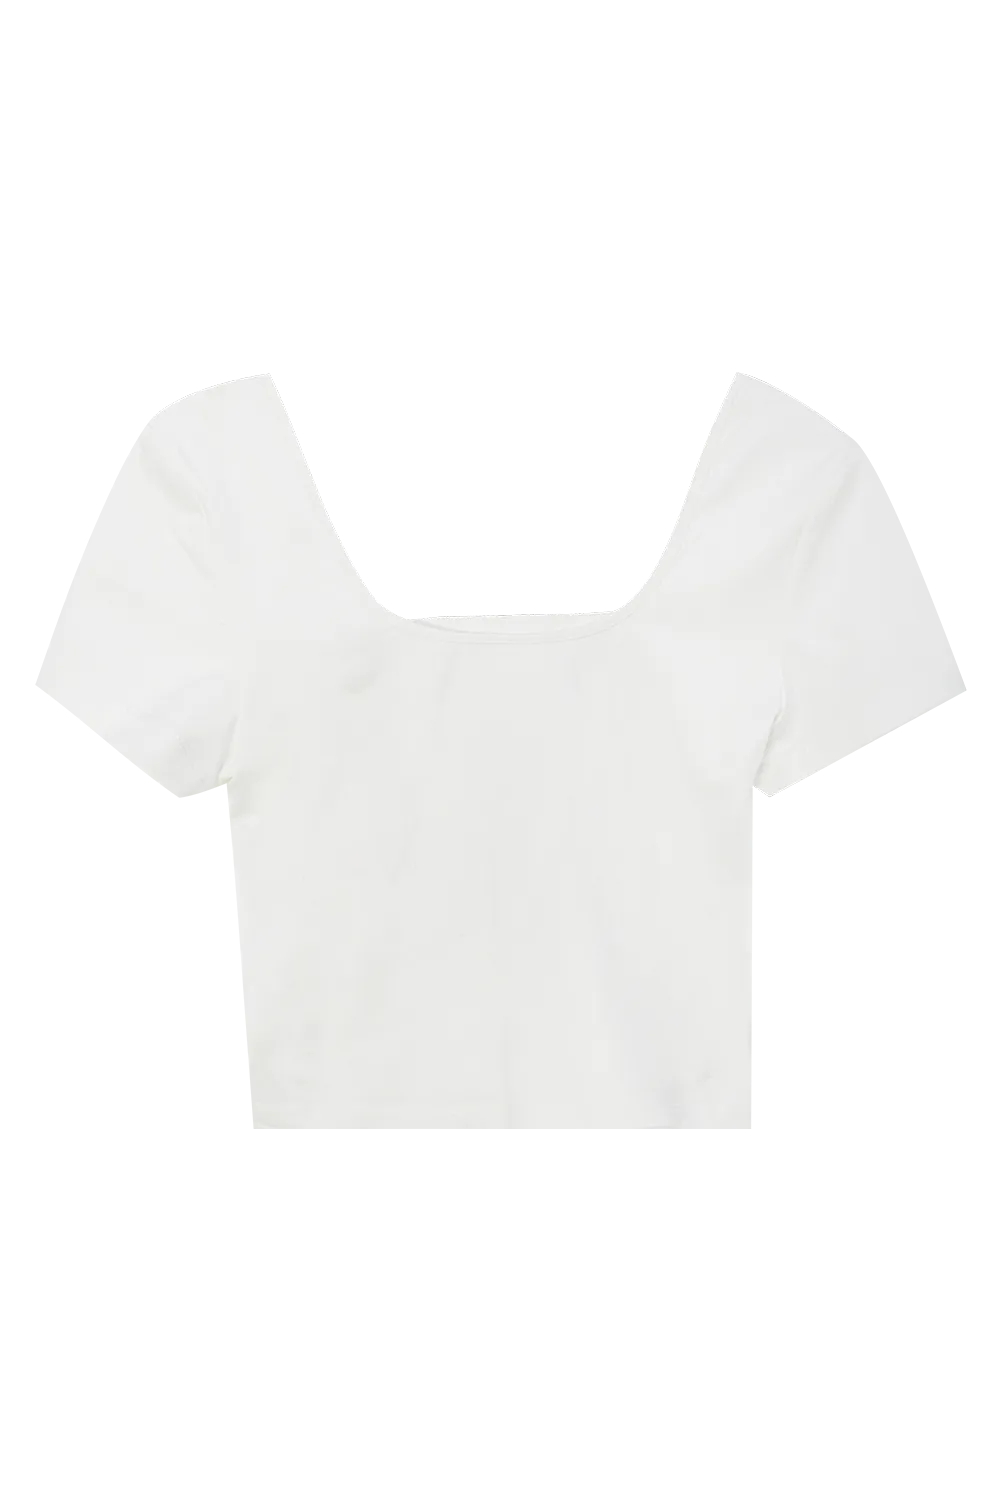 Women's Short Sleeve Blouse - Chic Square Neckline Top